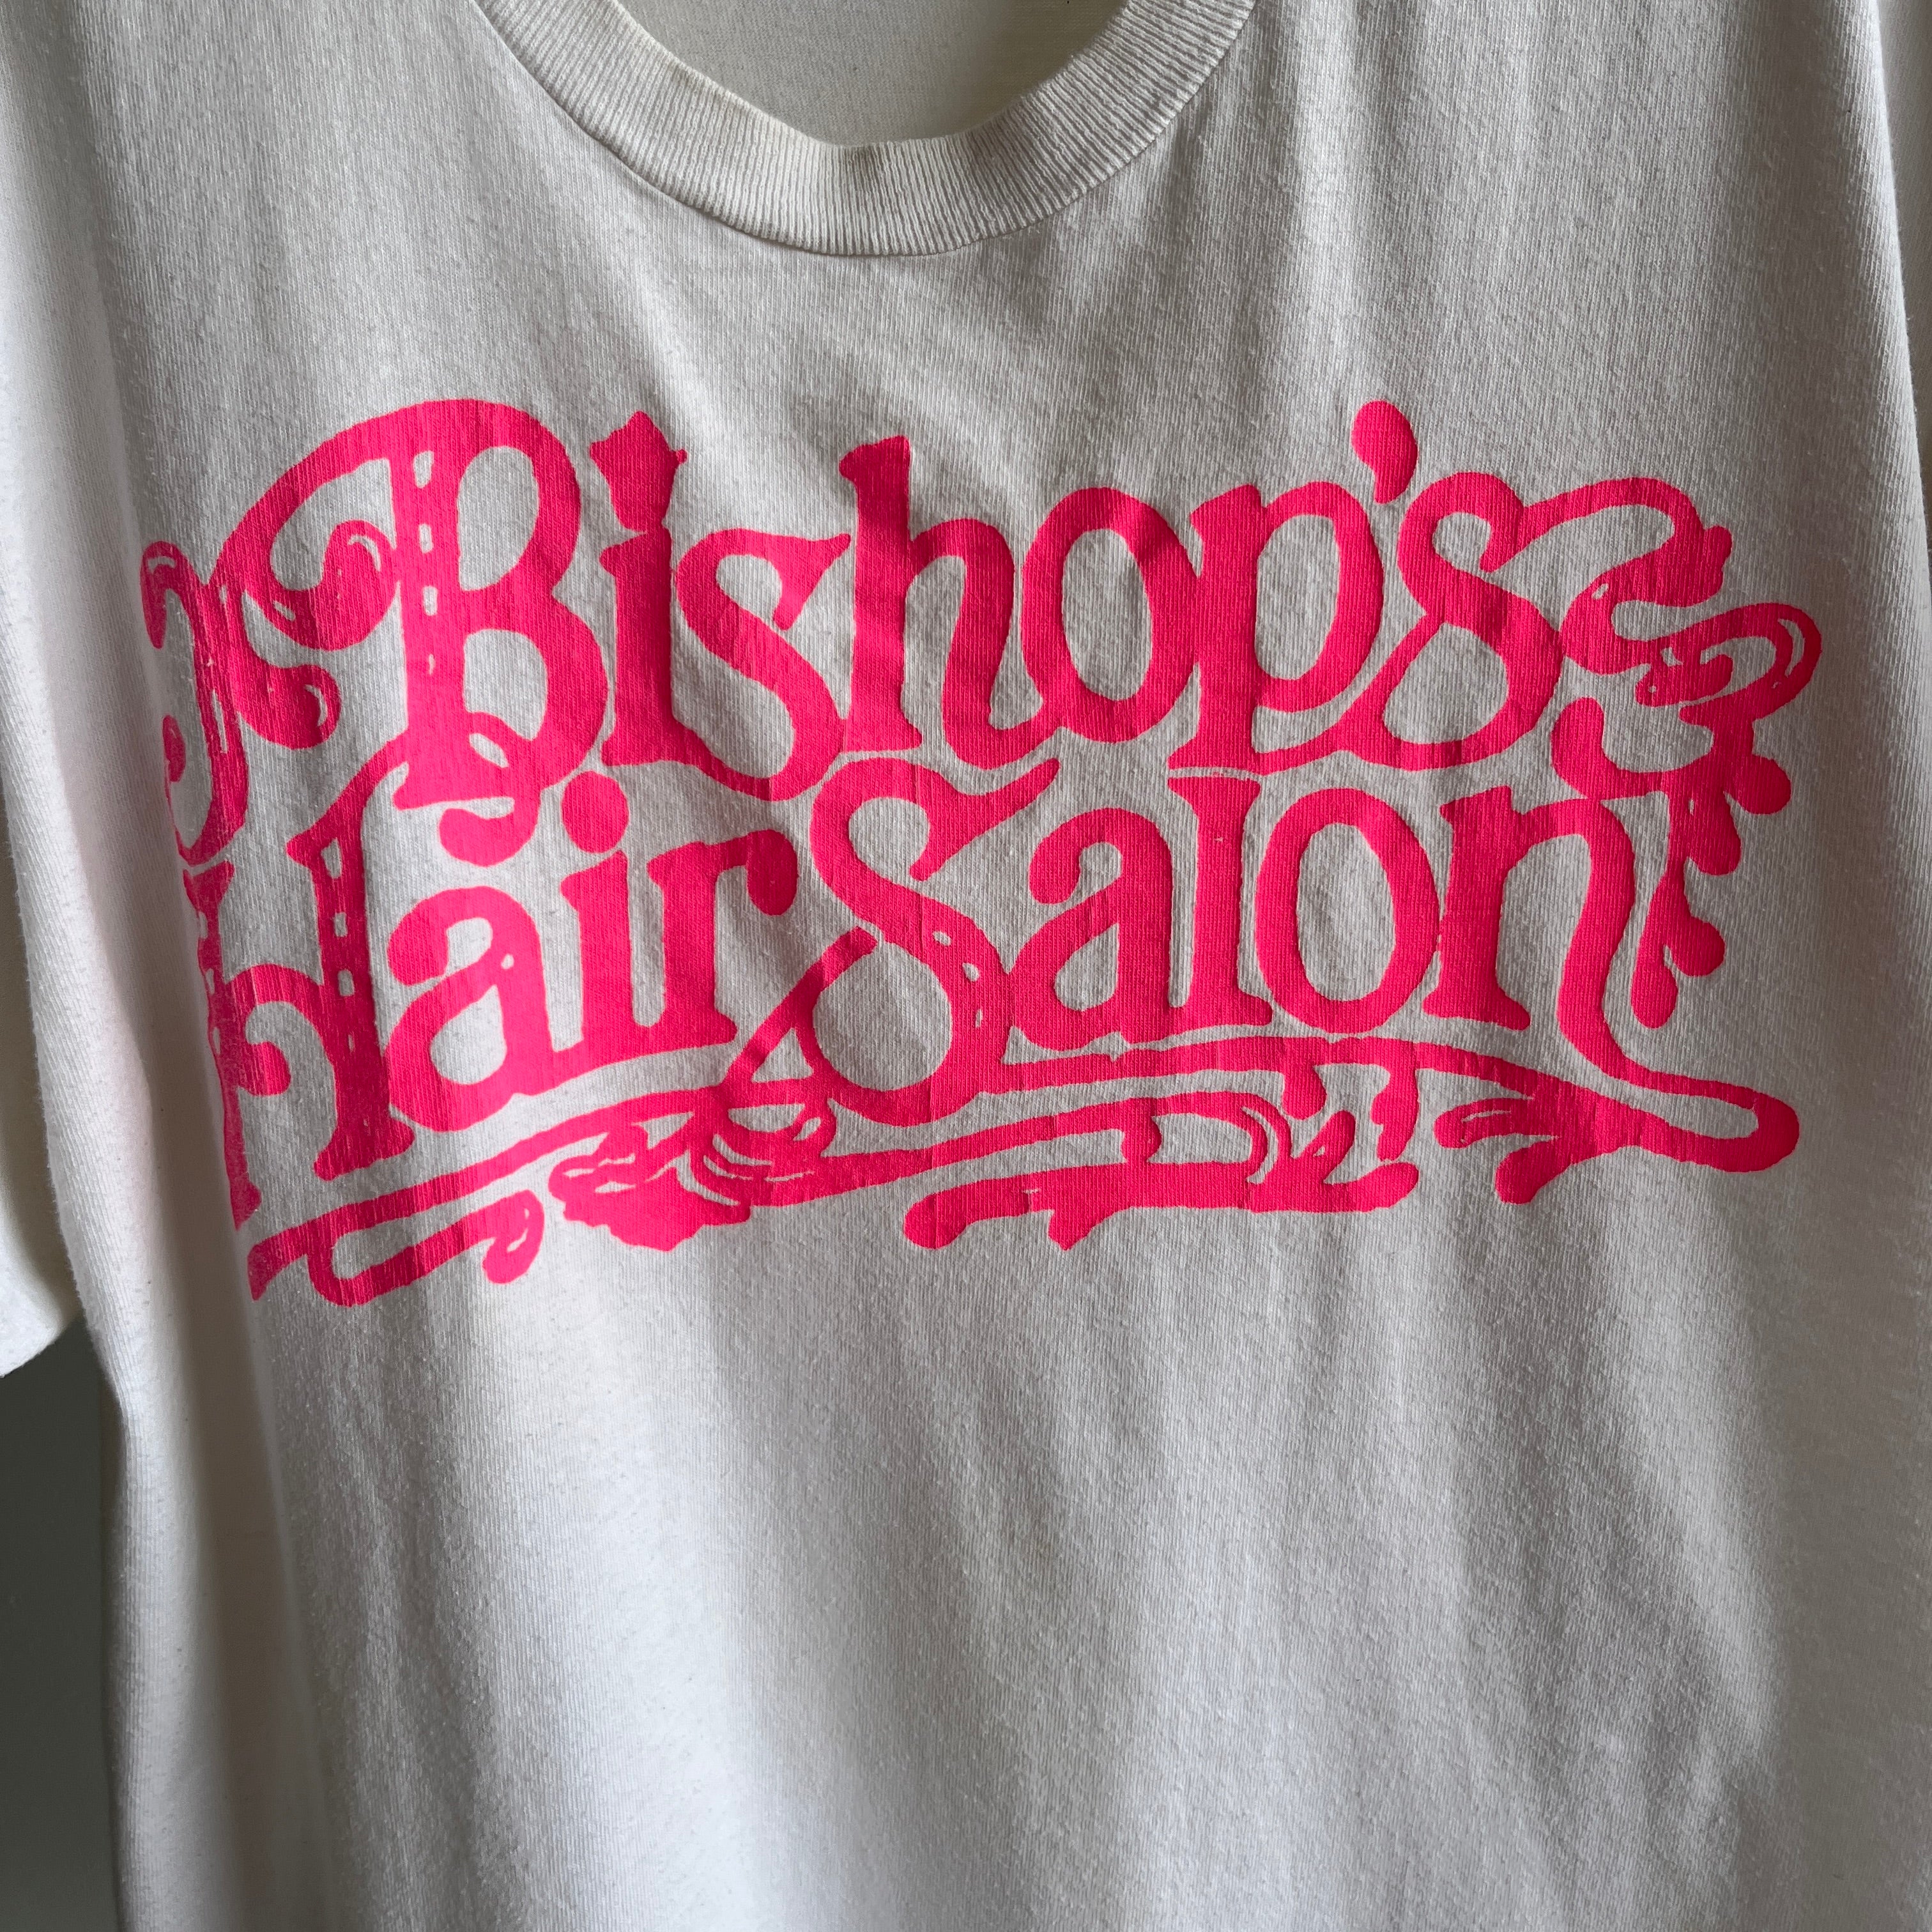 1980s Bishop's Hair Salon T-Shirt